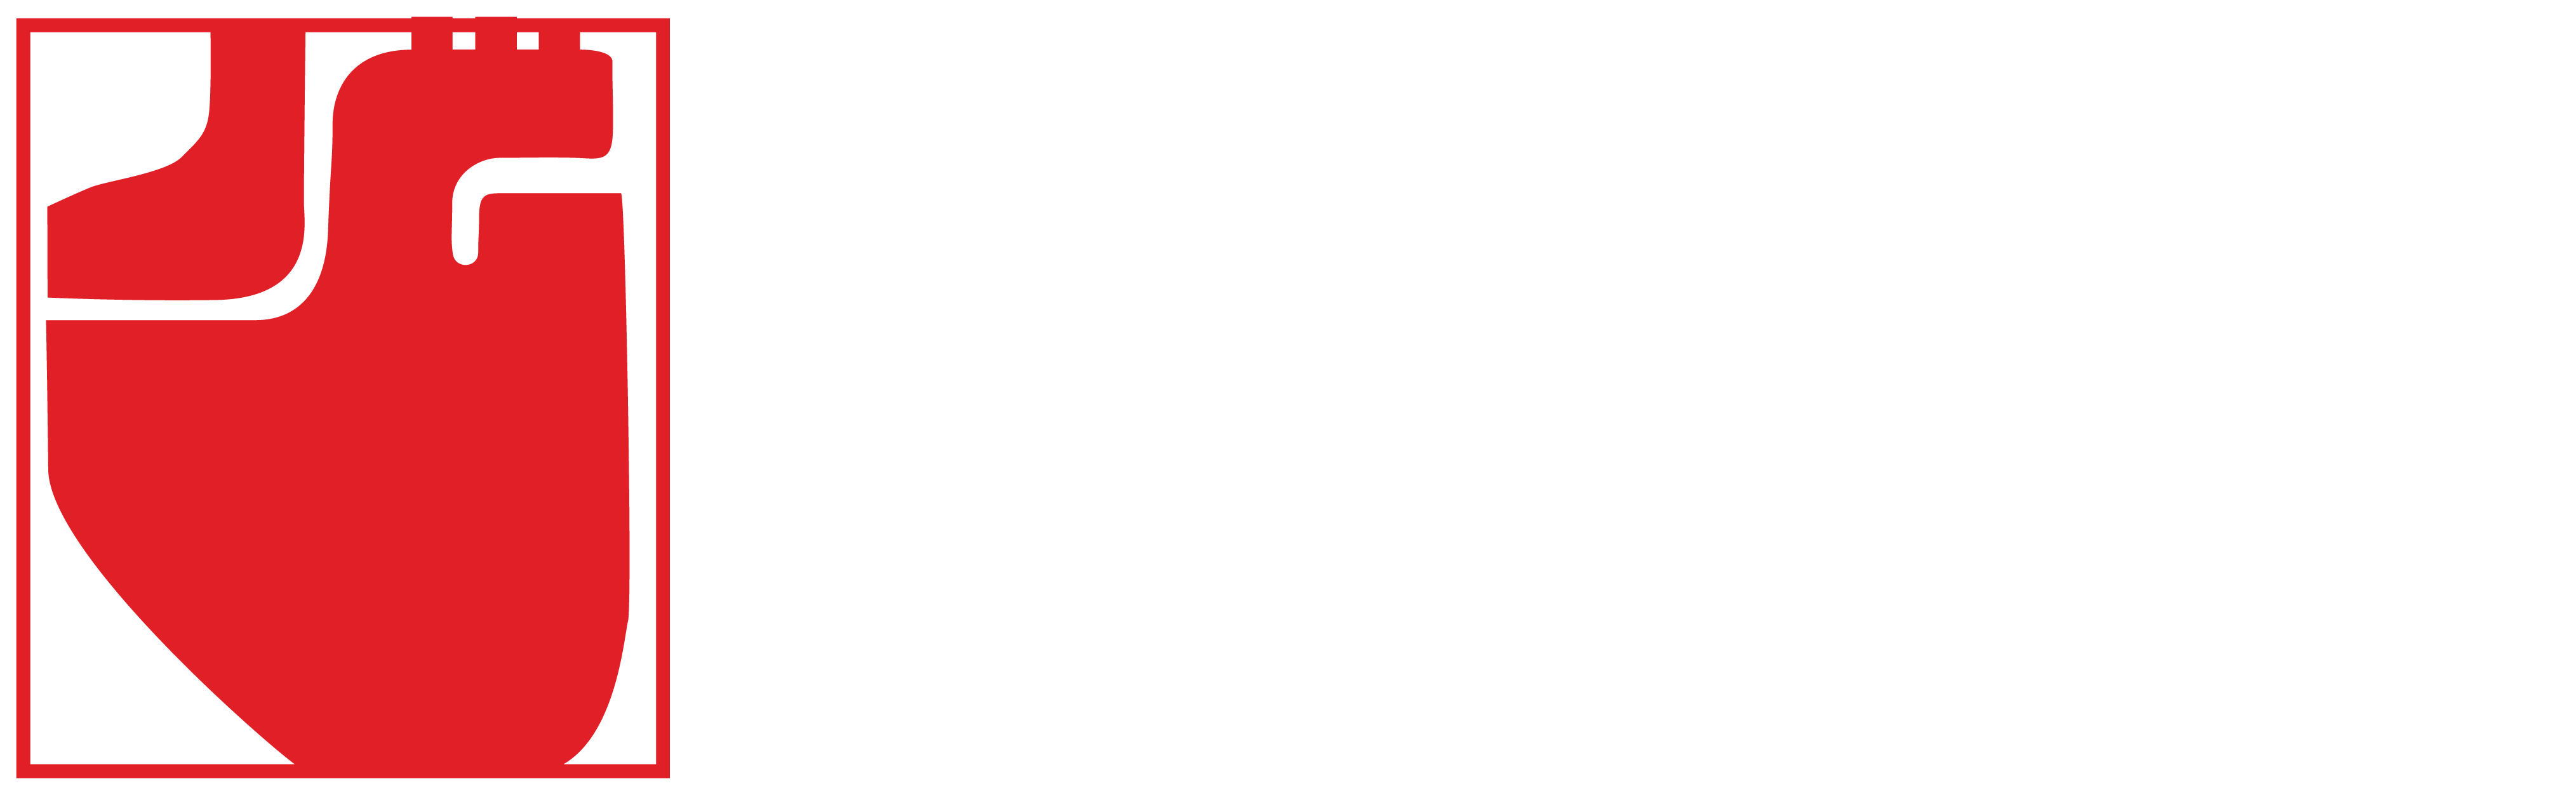 Turkish Society of Cardiology